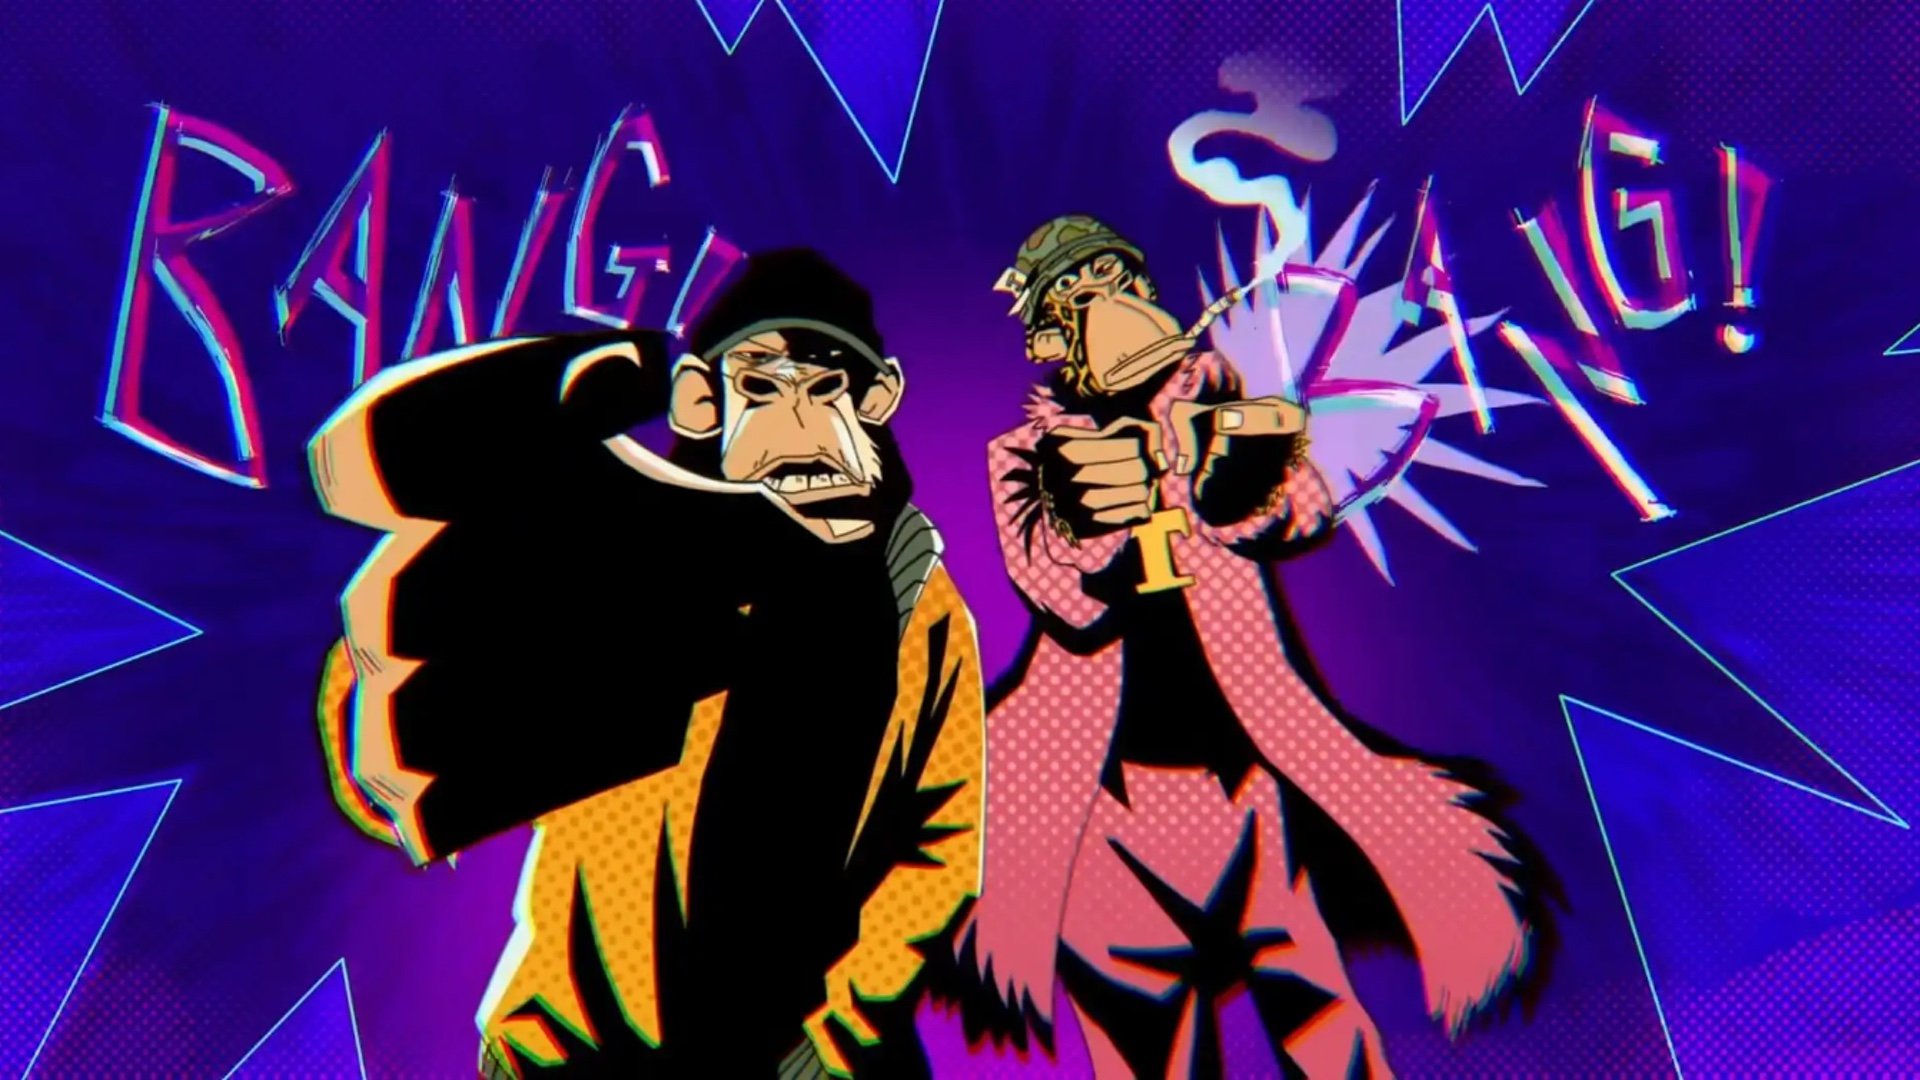 Eminem animated music video